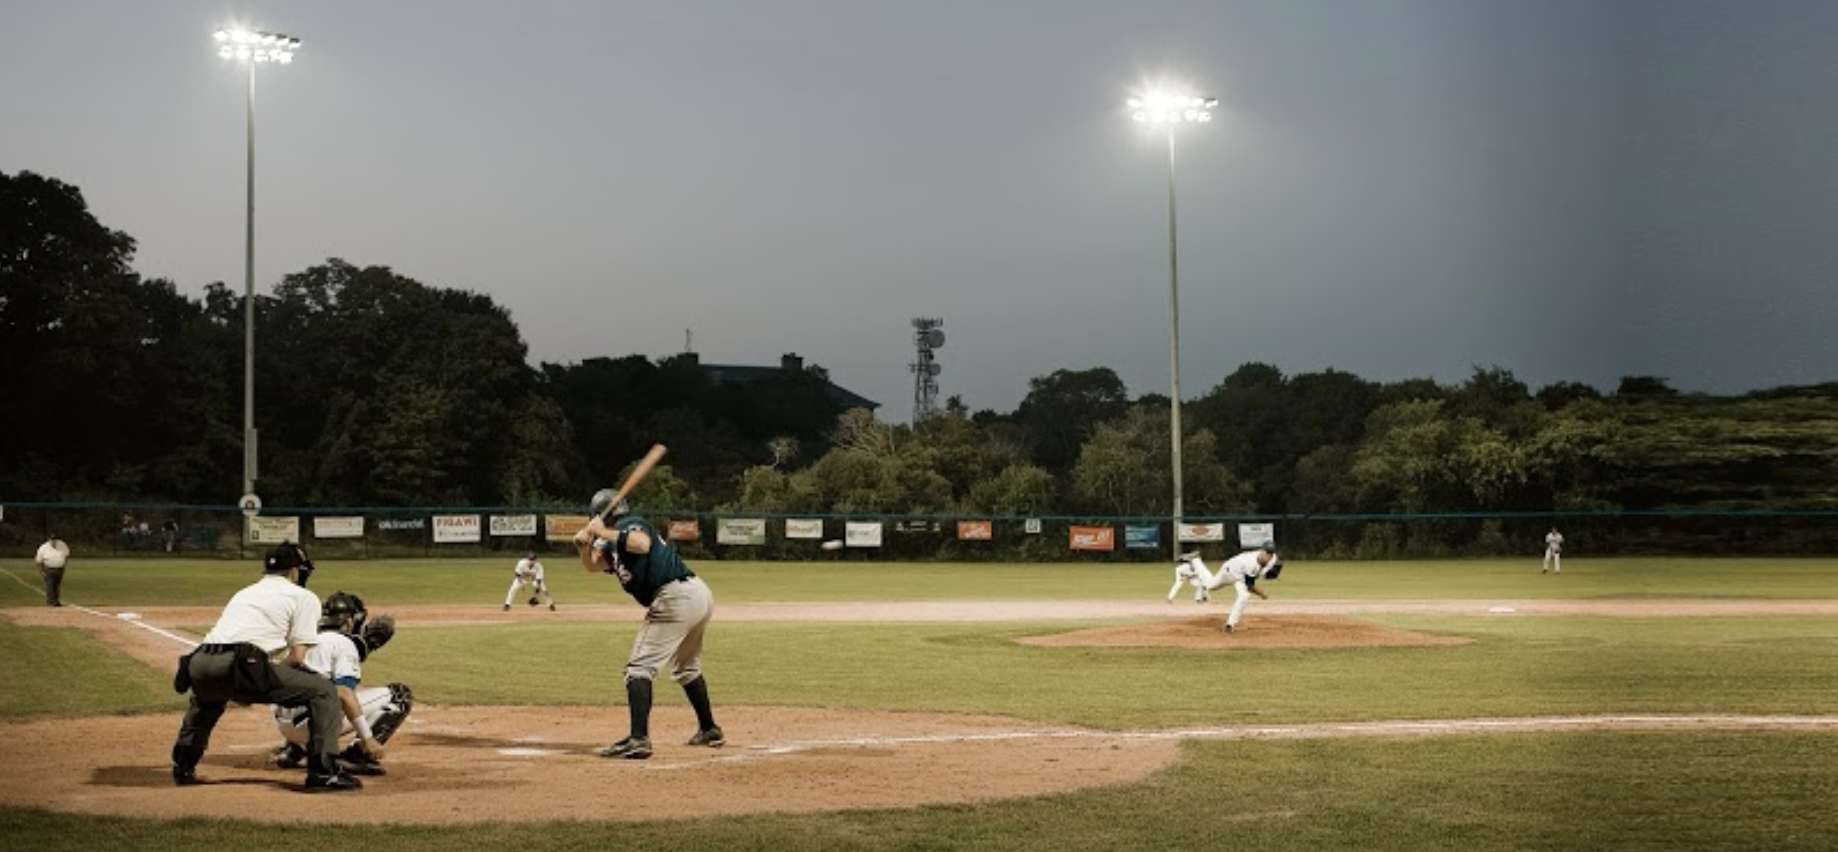 YF_Cape_Cod_Baseball_League_night_game